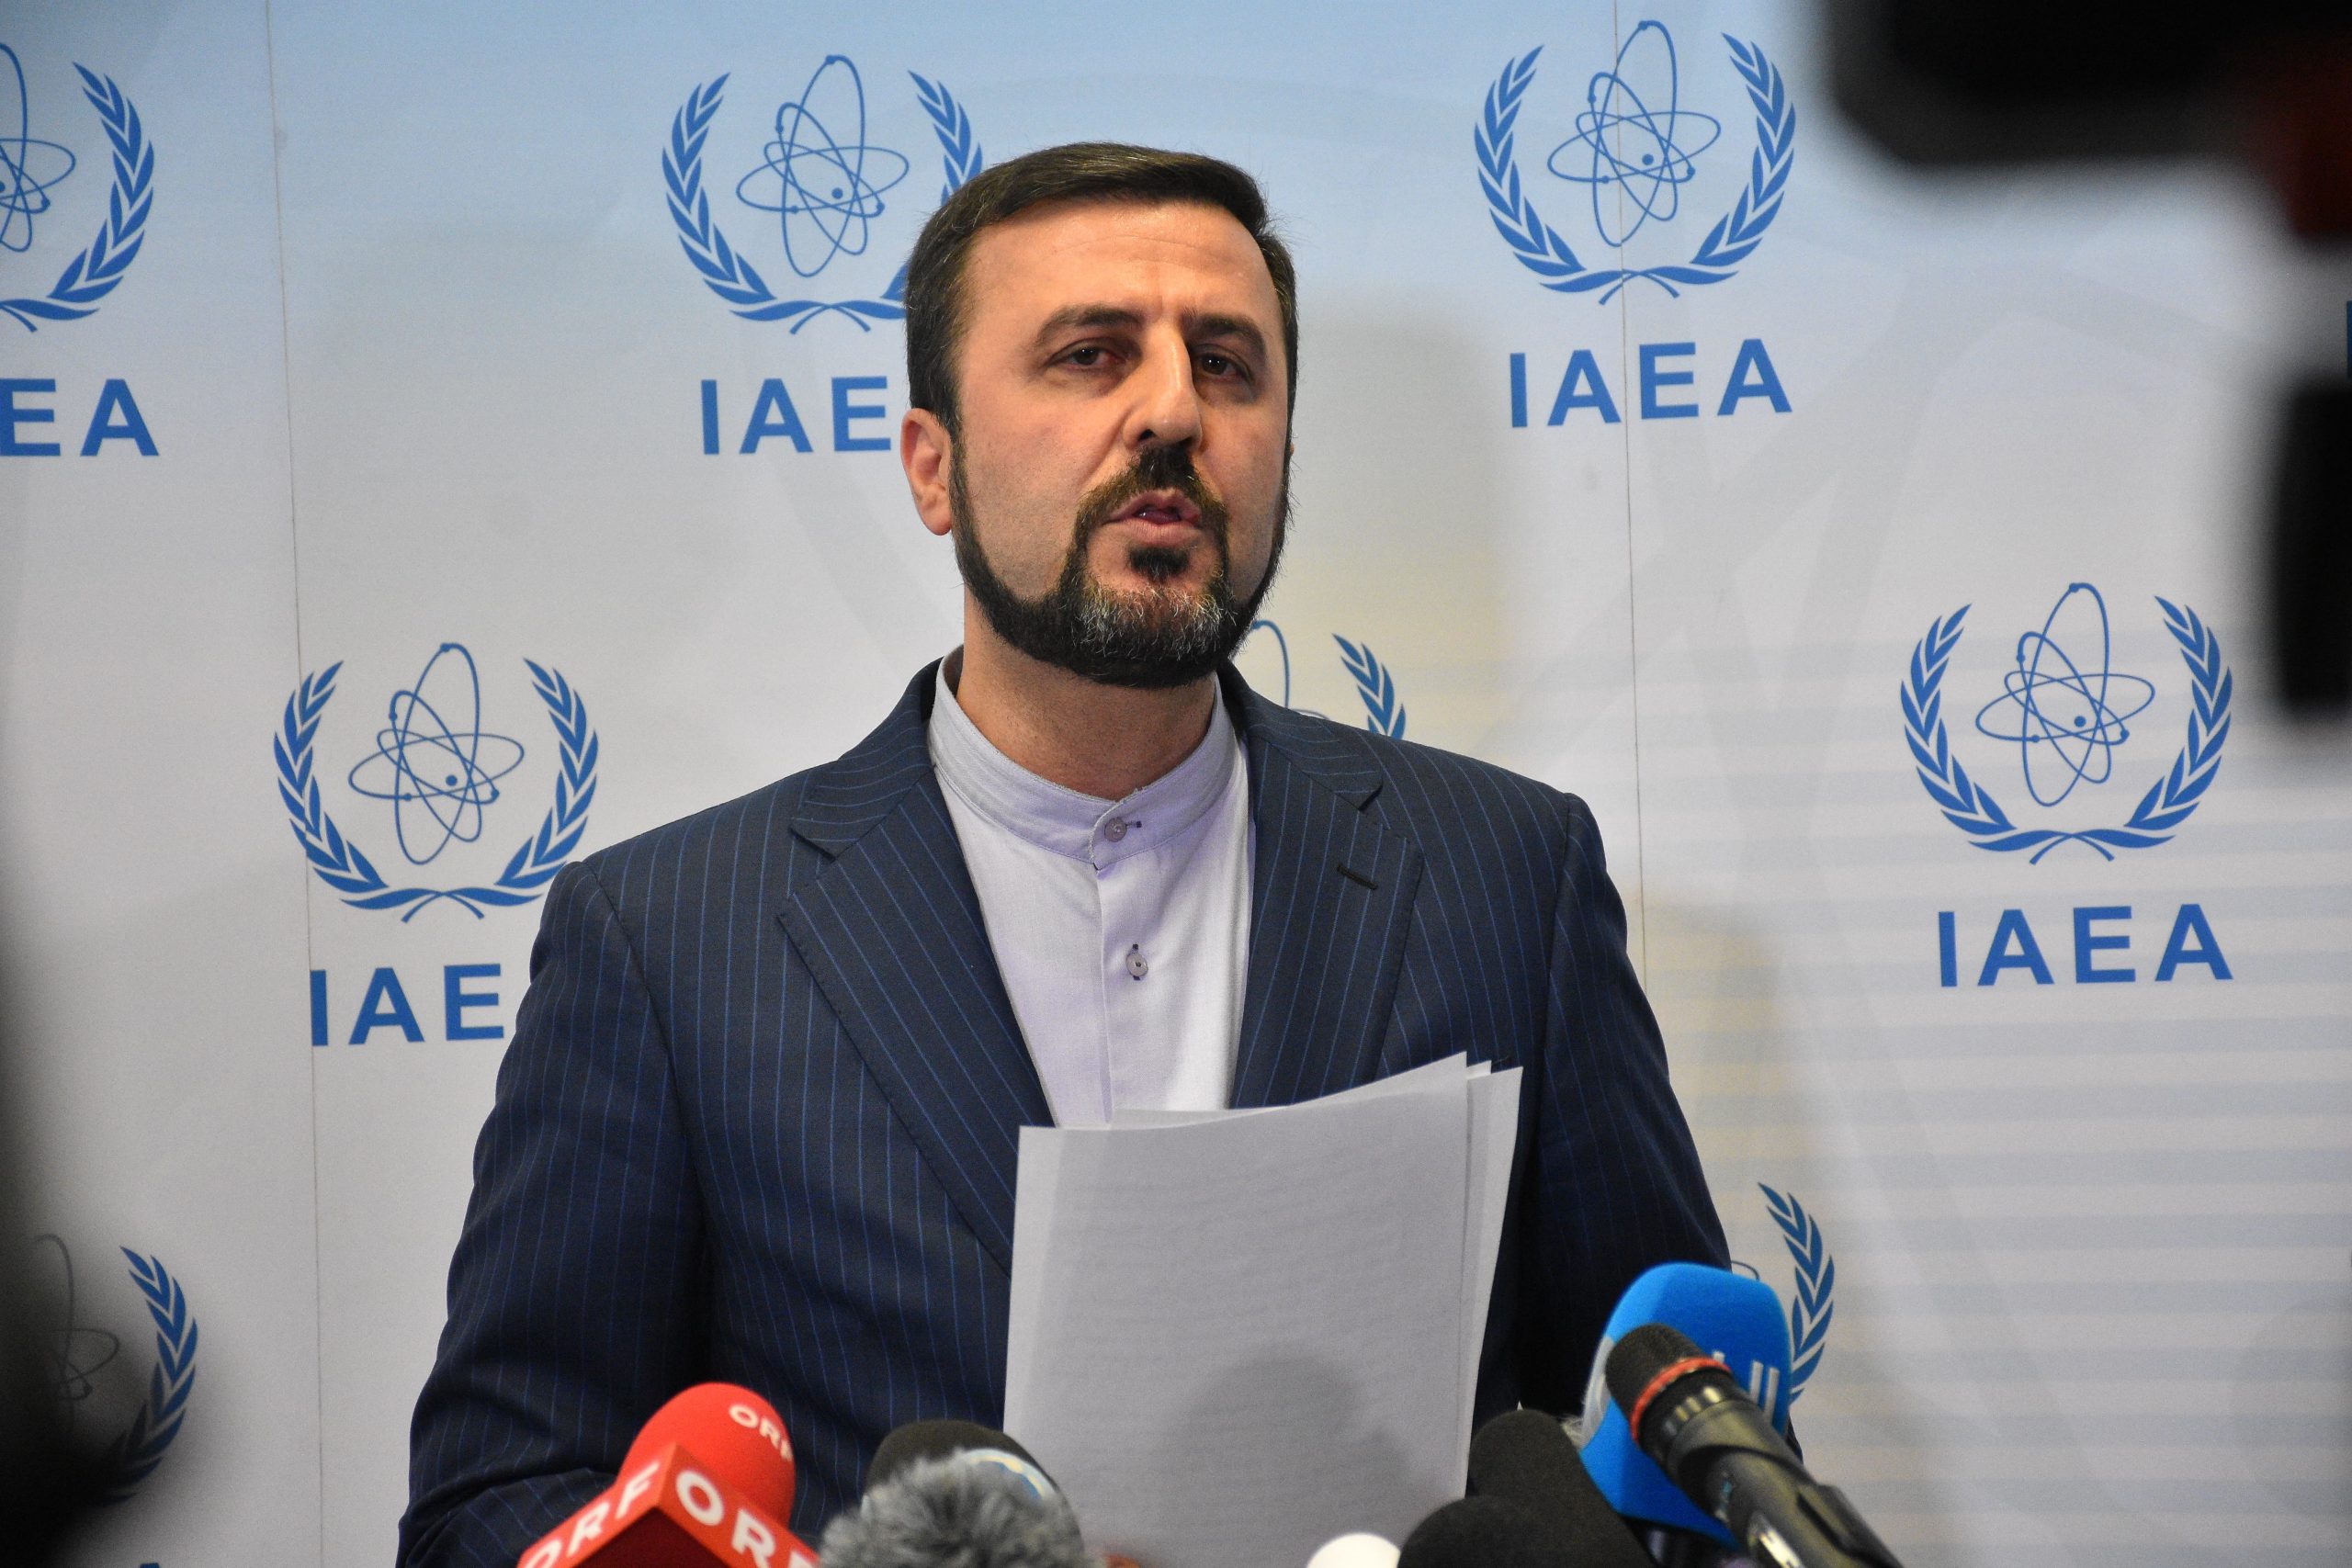 IAEA Deputy Chief to pay visit to Iran | Mena Affairs